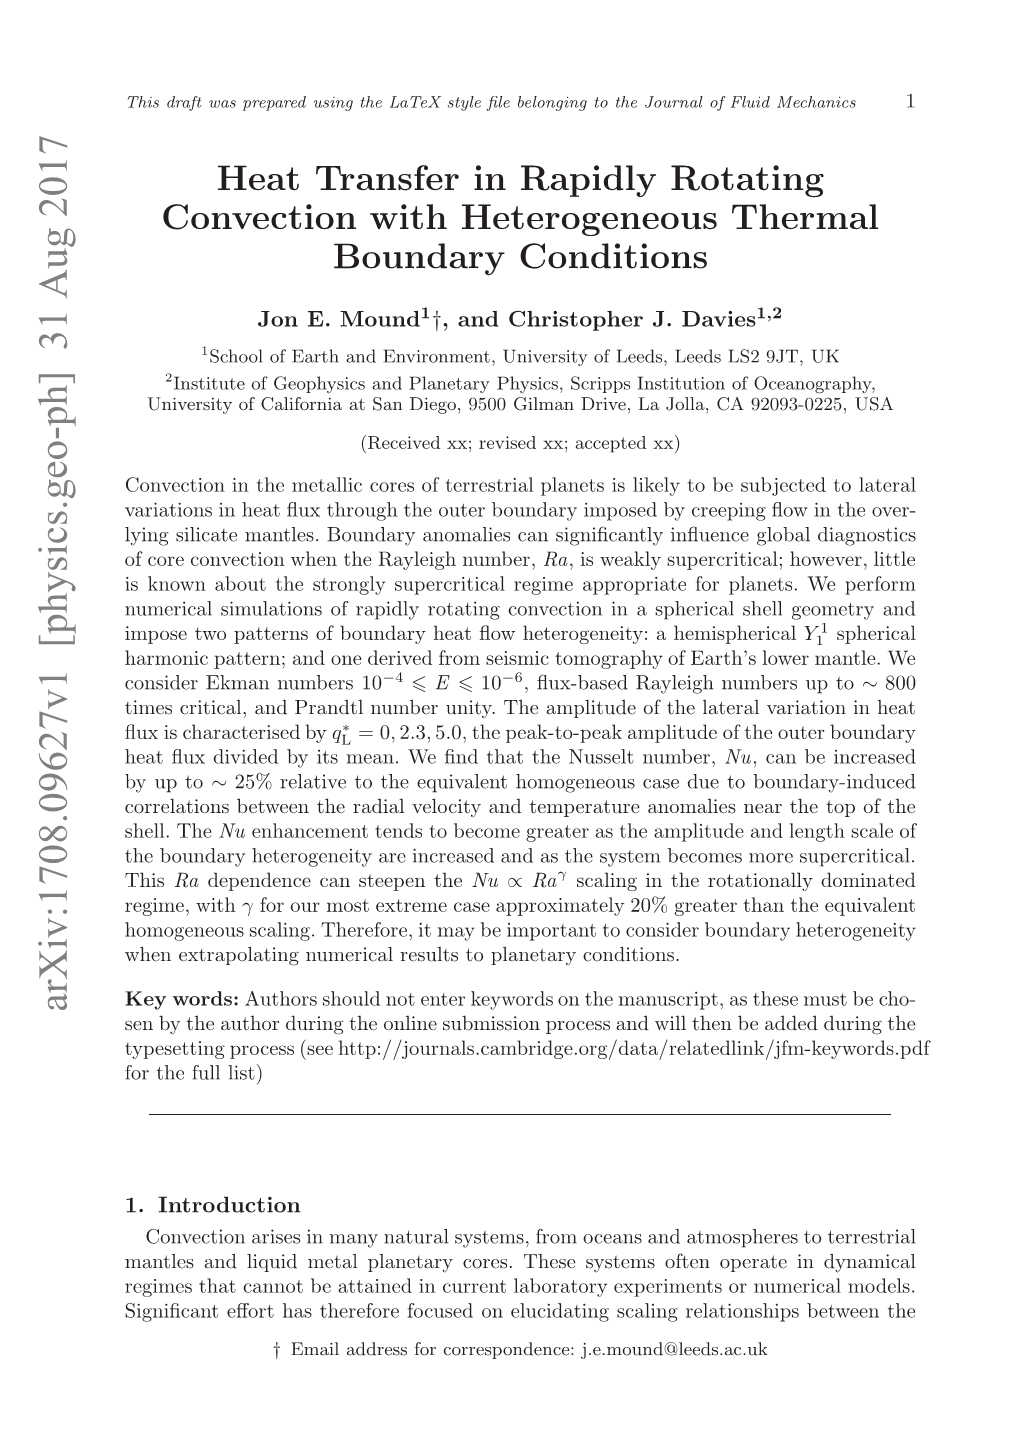 Heat Flow and Boundary Heterogeneity in Rotating Convection